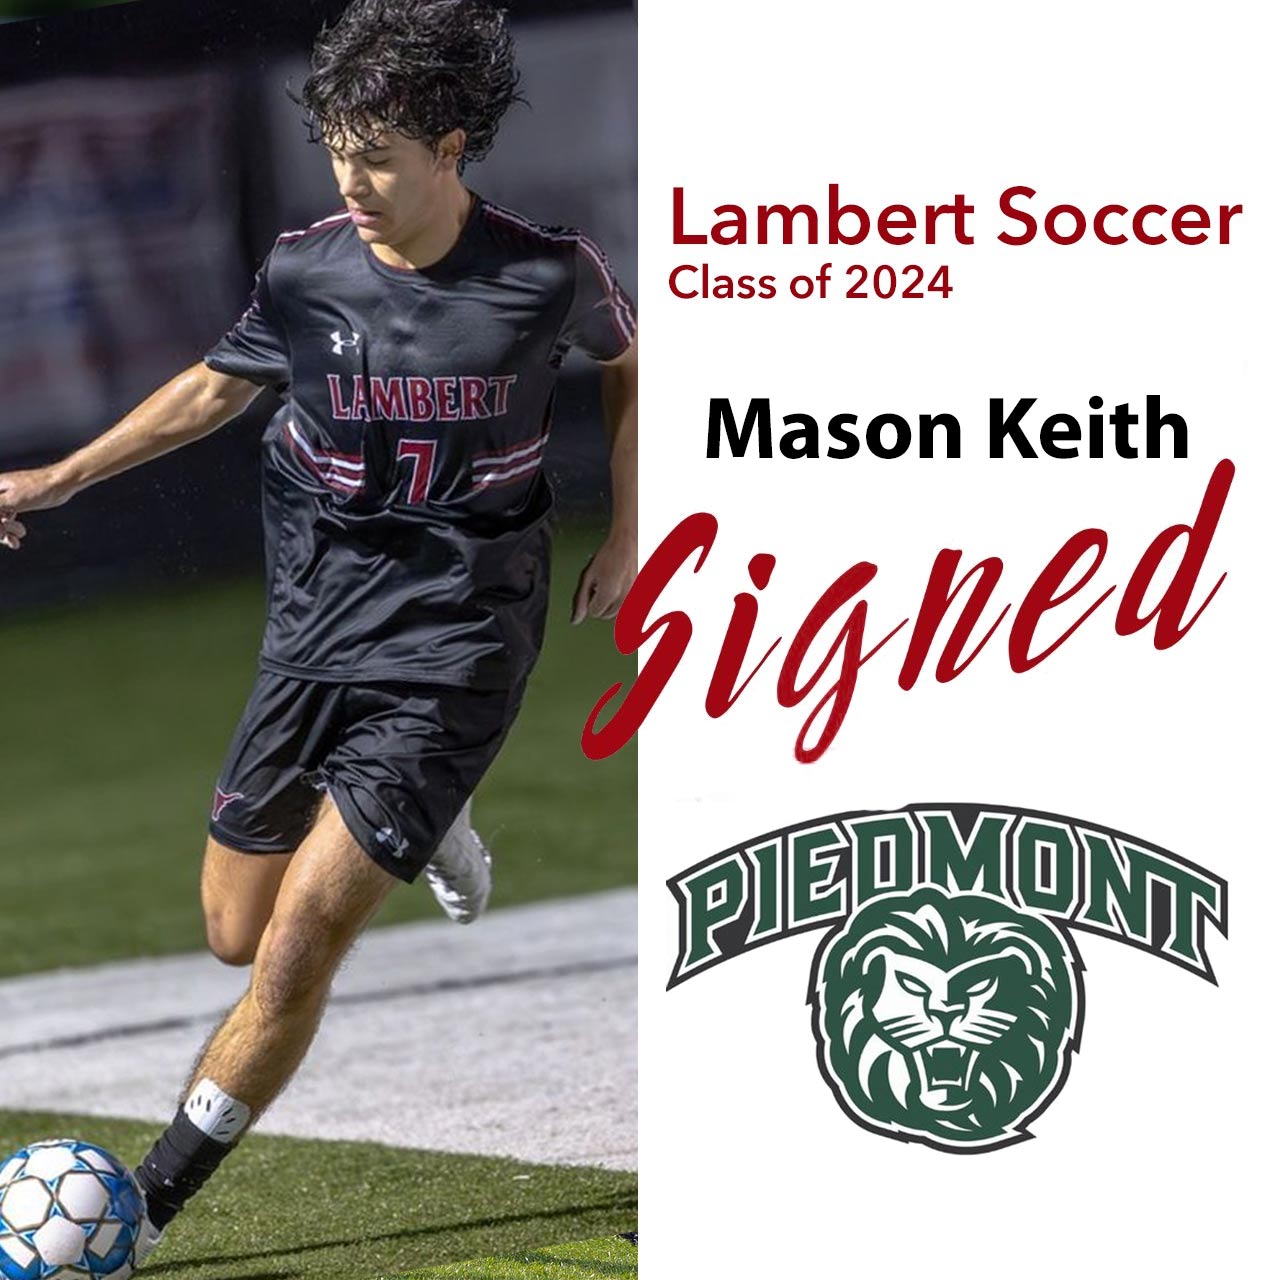 mason keith signs with piedmont university